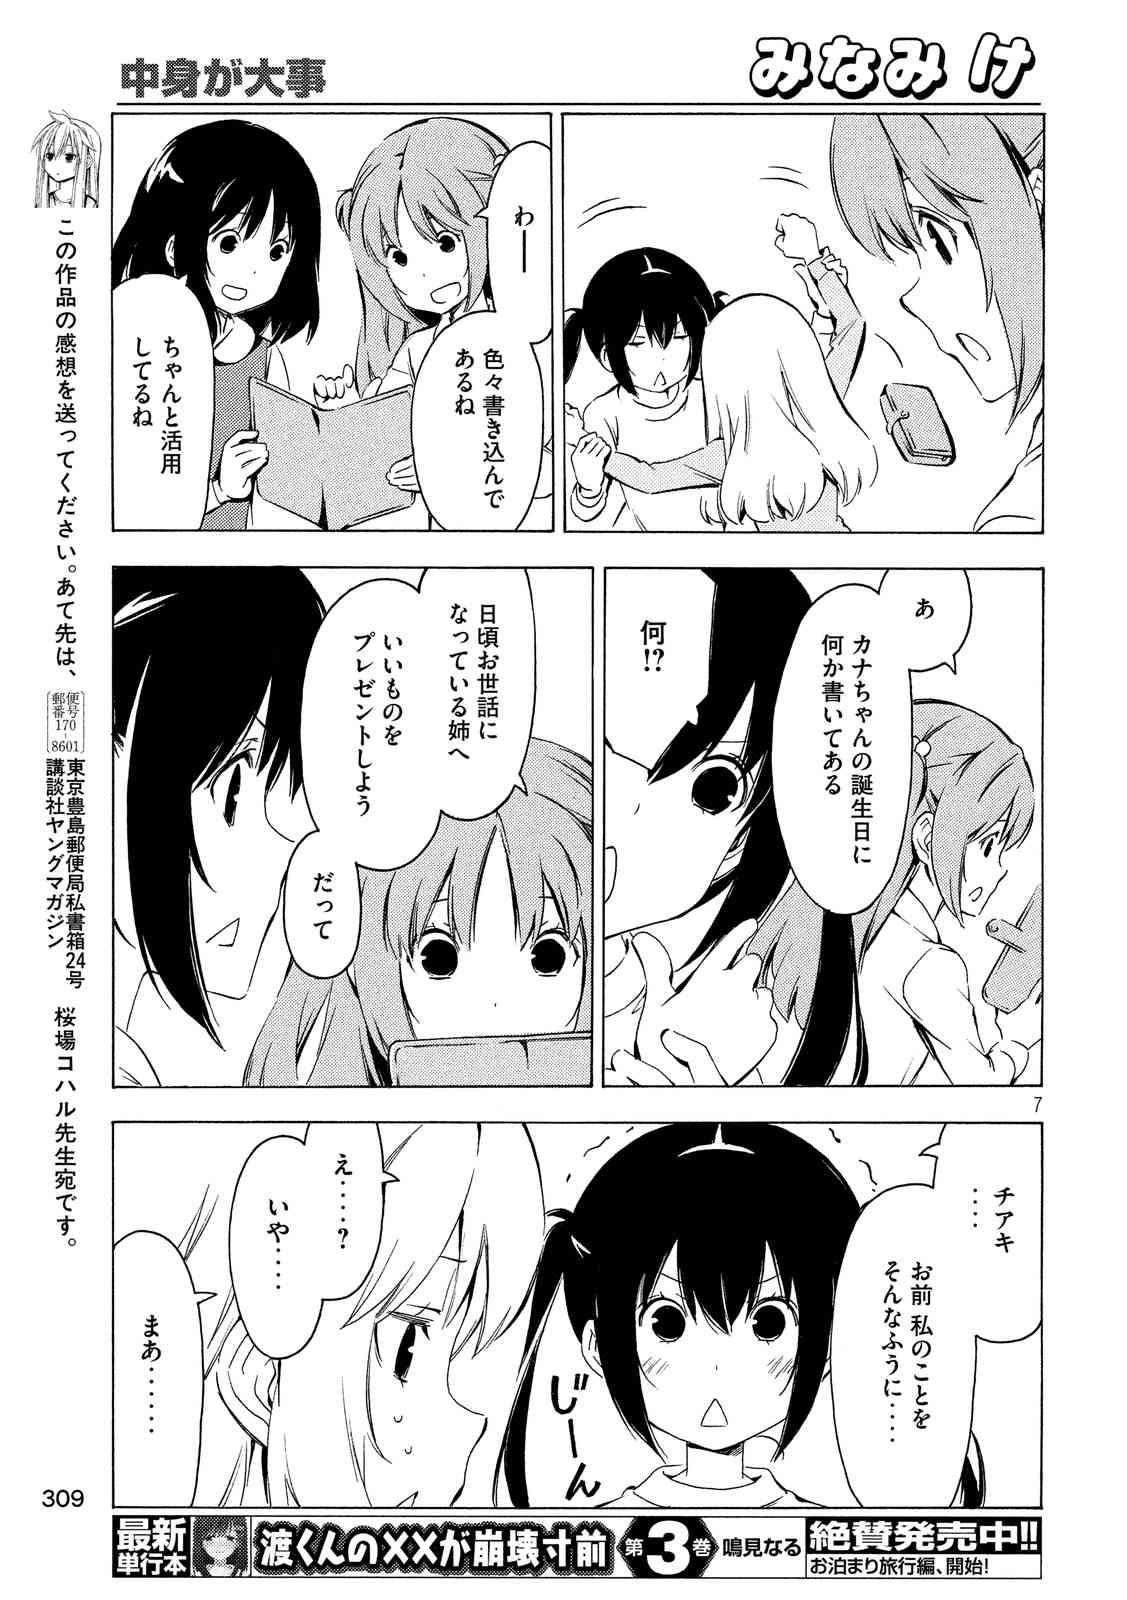 Minami-ke - Chapter 308 - Page 7